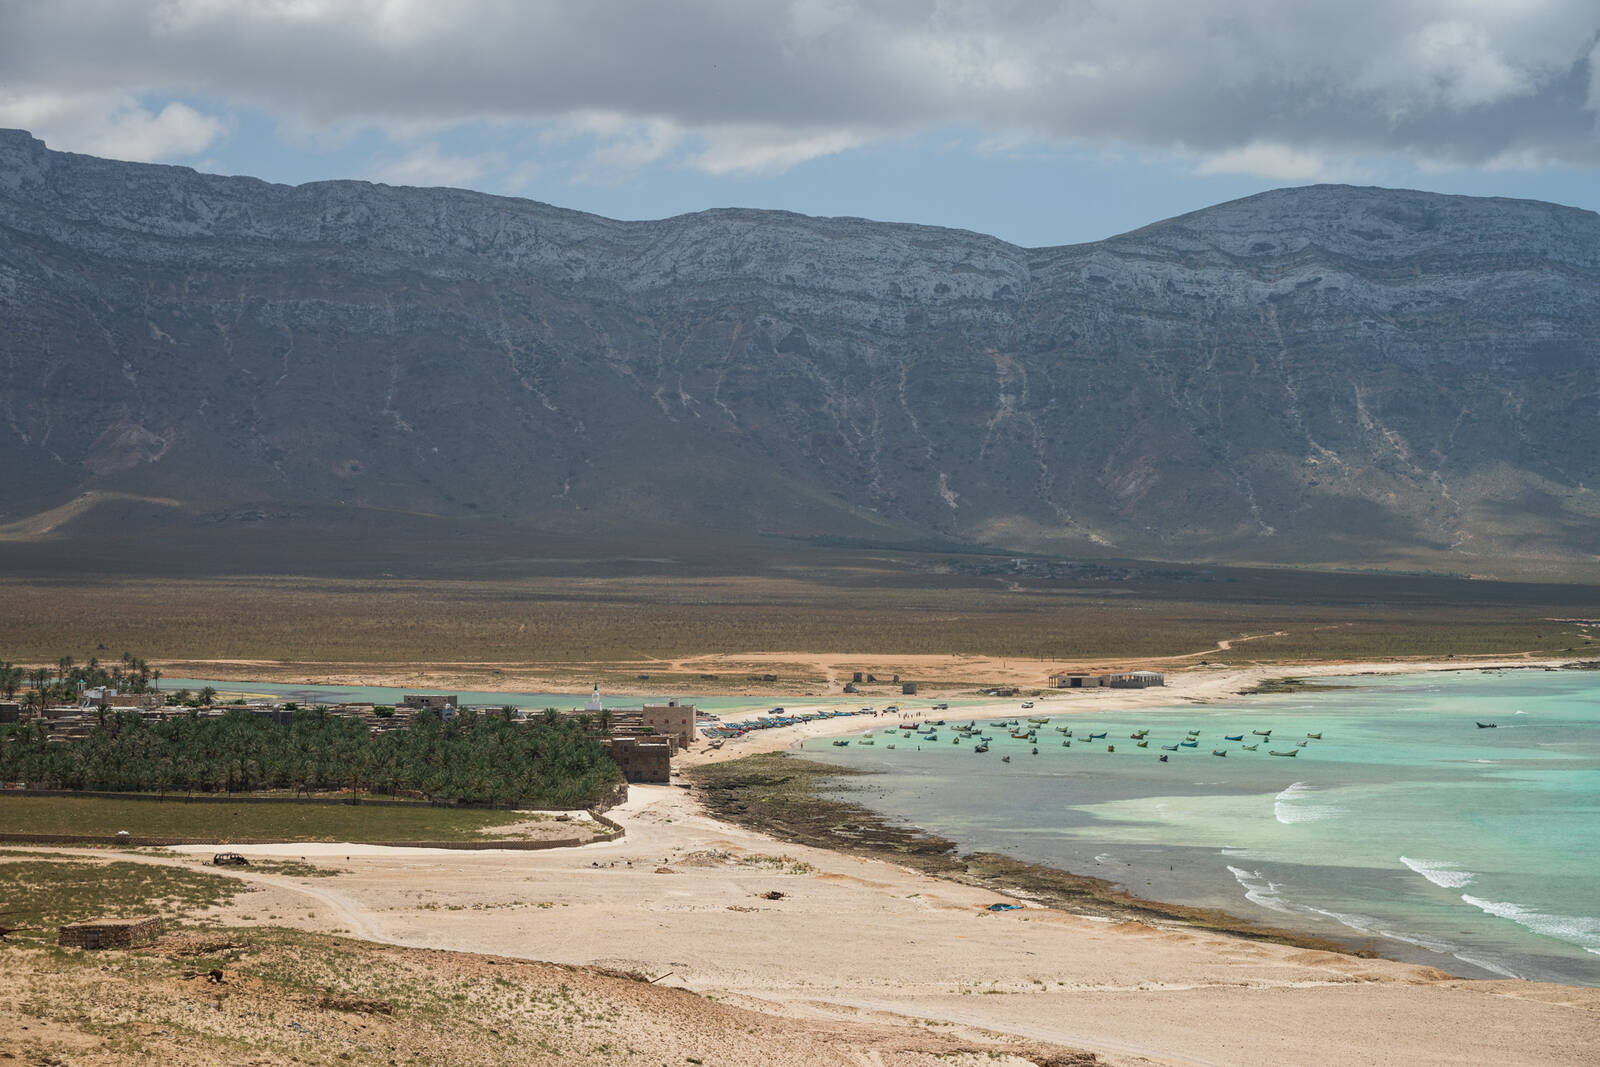 Image of Qalansiyah Views, Socotra by Luka Esenko